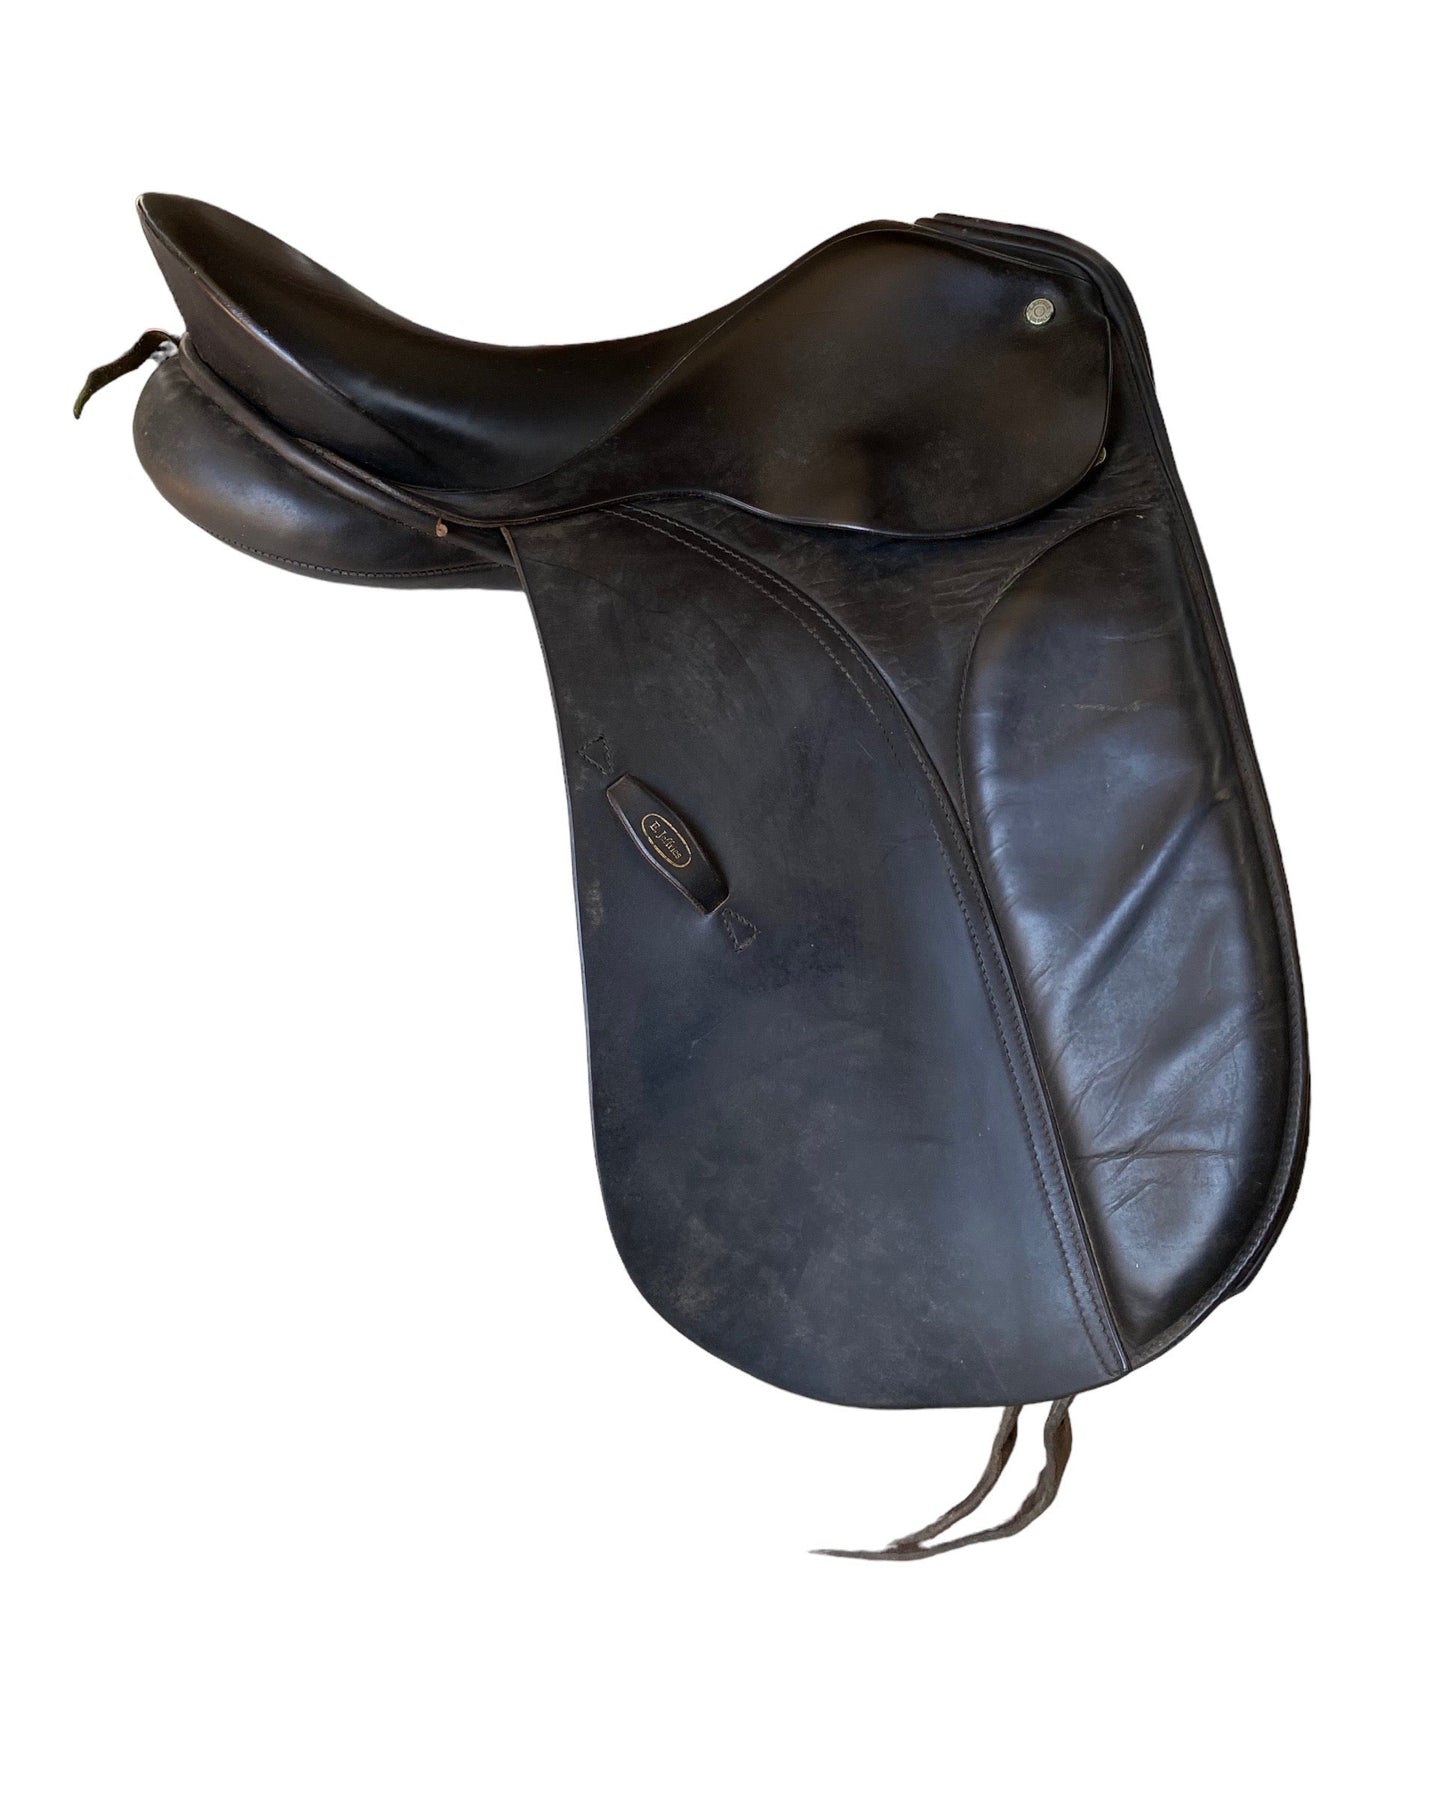 E.Jeffries Dressage Saddle 16.5" Black (2314206)